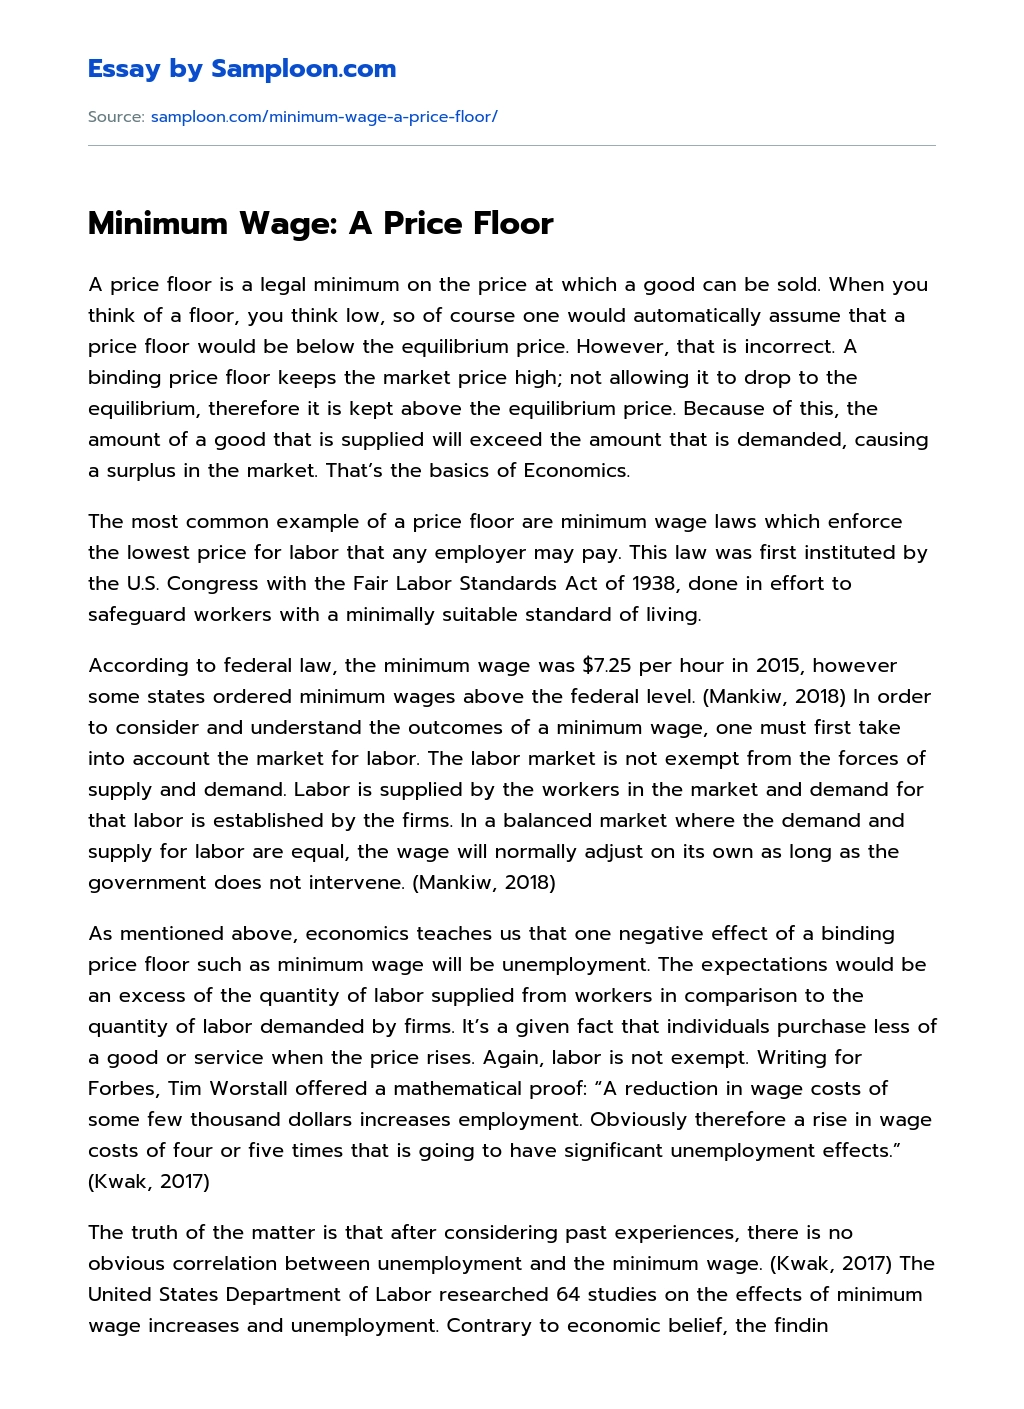 Minimum Wage: A Price Floor essay